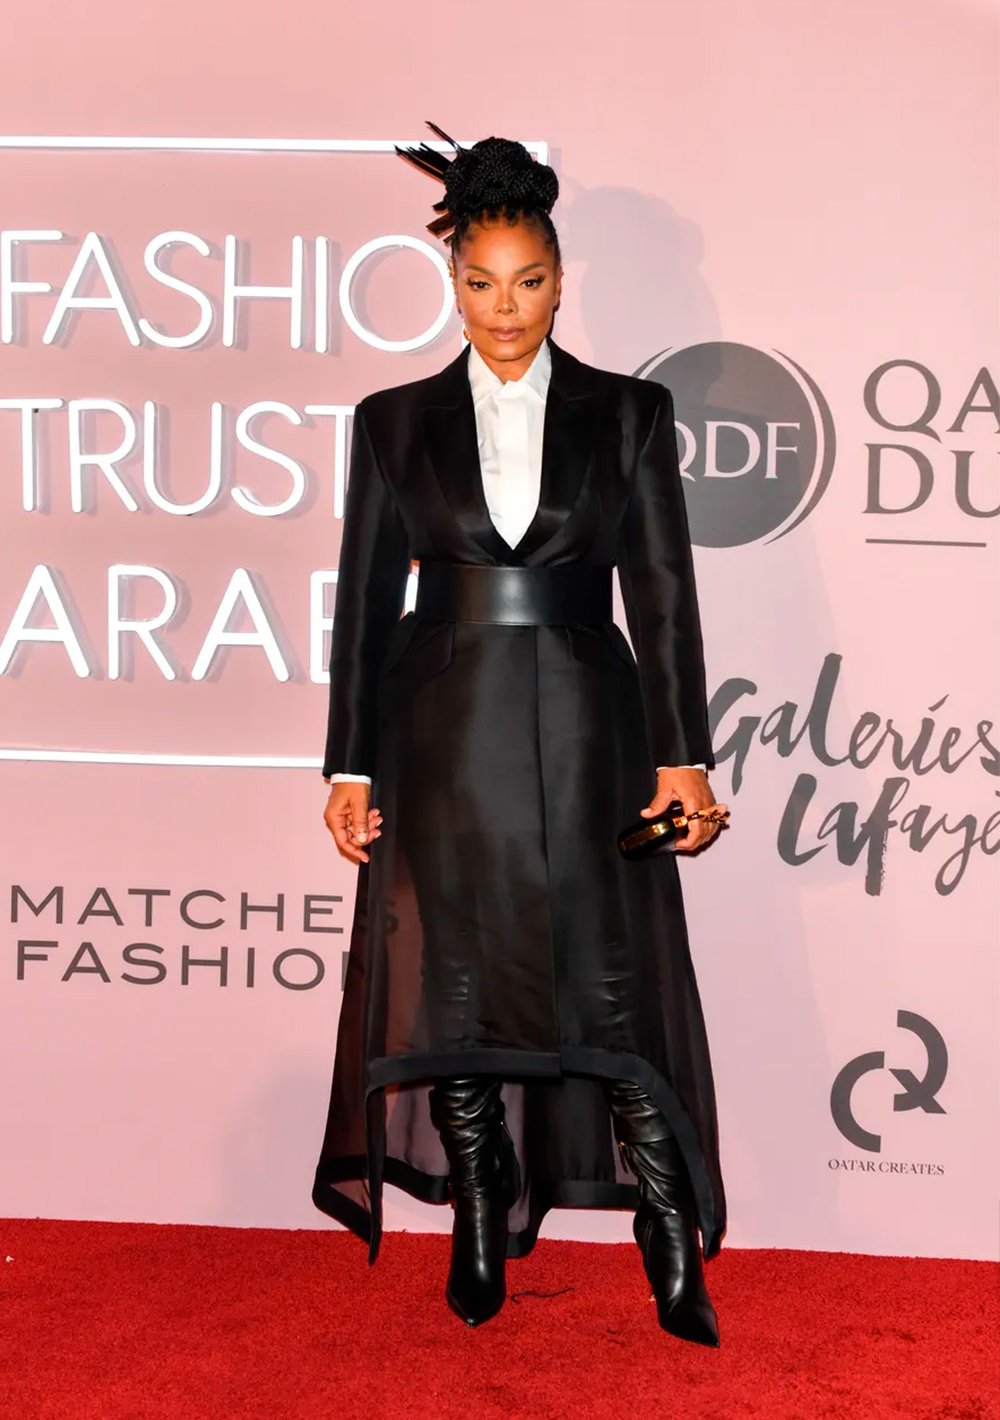 It girls - Fashion Trust Arabia, Janet Jackson - Fashion Trust Arabia - Primavera - Street Style  - https://stealthelook.com.br